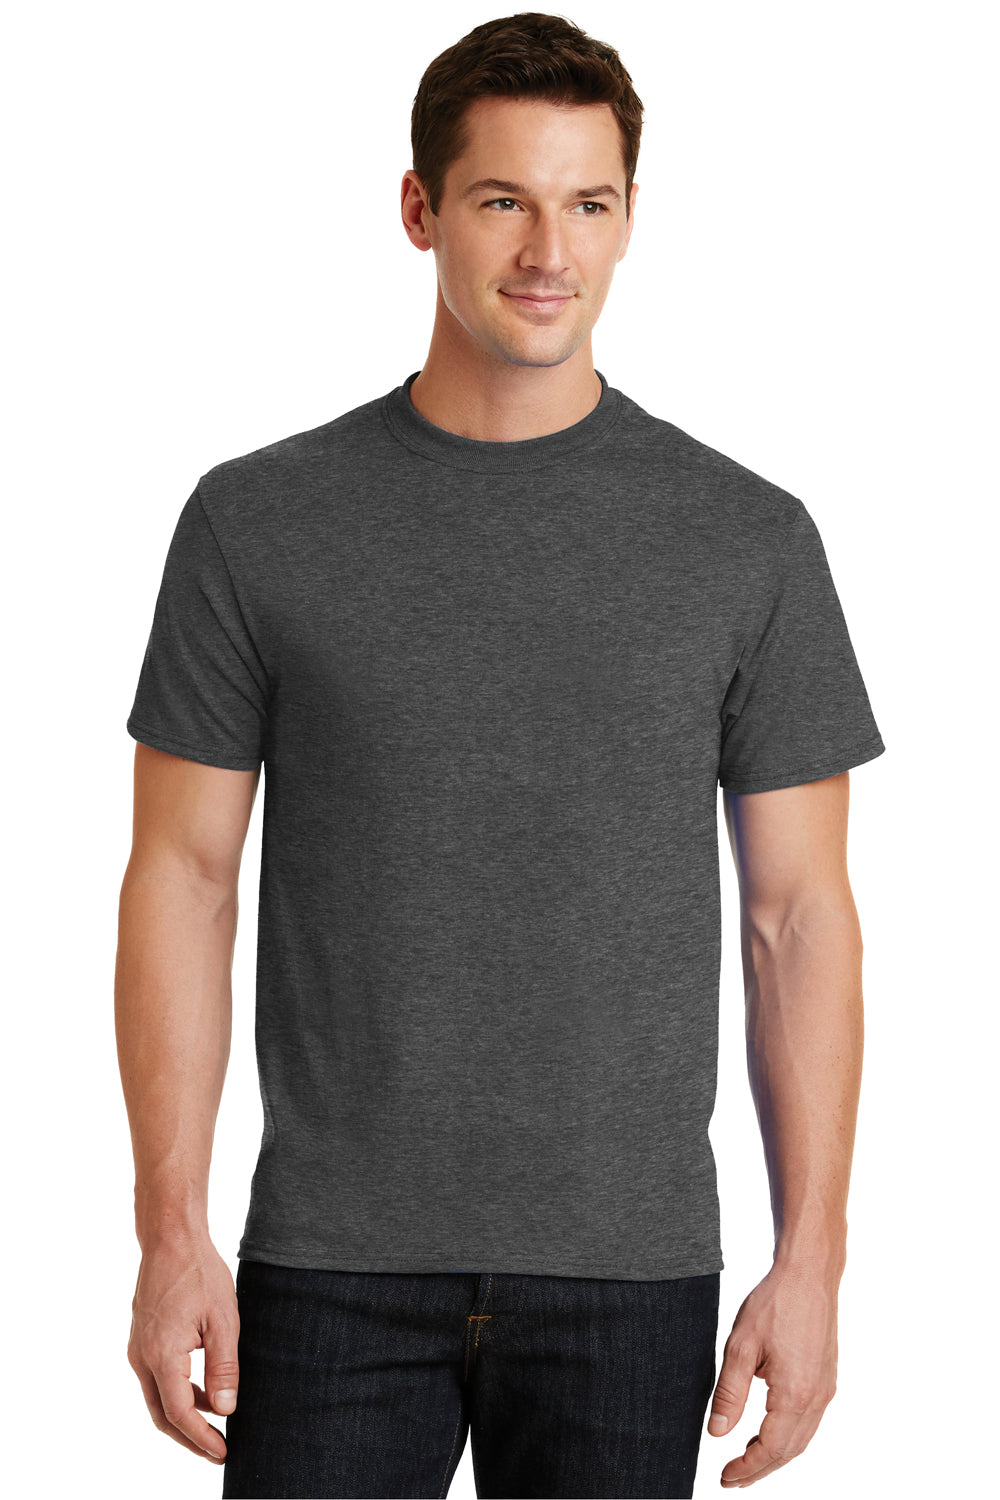 Port & Company PC55 Mens Core Short Sleeve Crewneck T-Shirt Heather Dark Grey Front